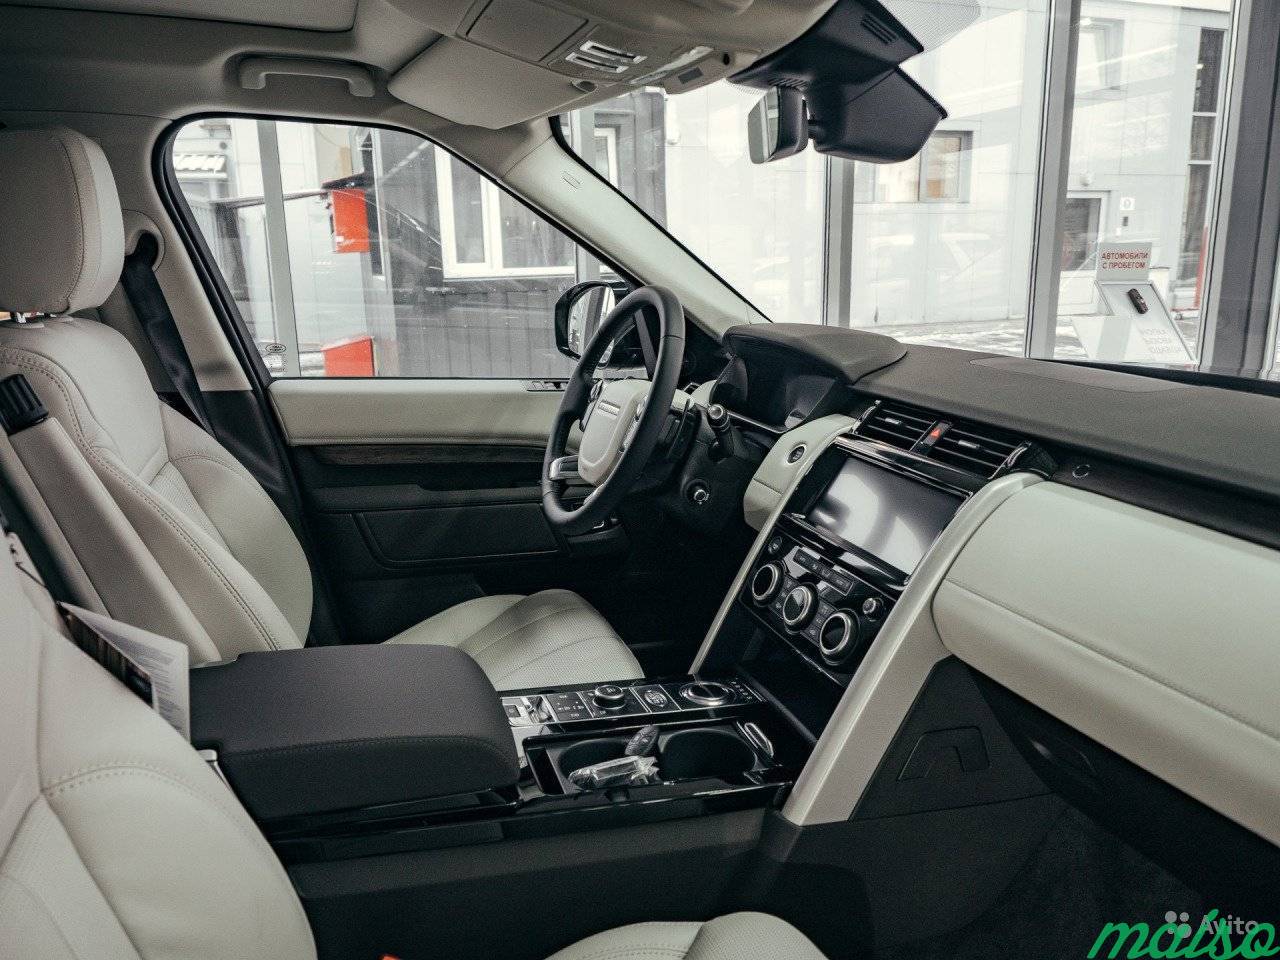 Land Rover Discovery 3.0 AT, 2018, внедорожник в Санкт-Петербурге. Фото 6